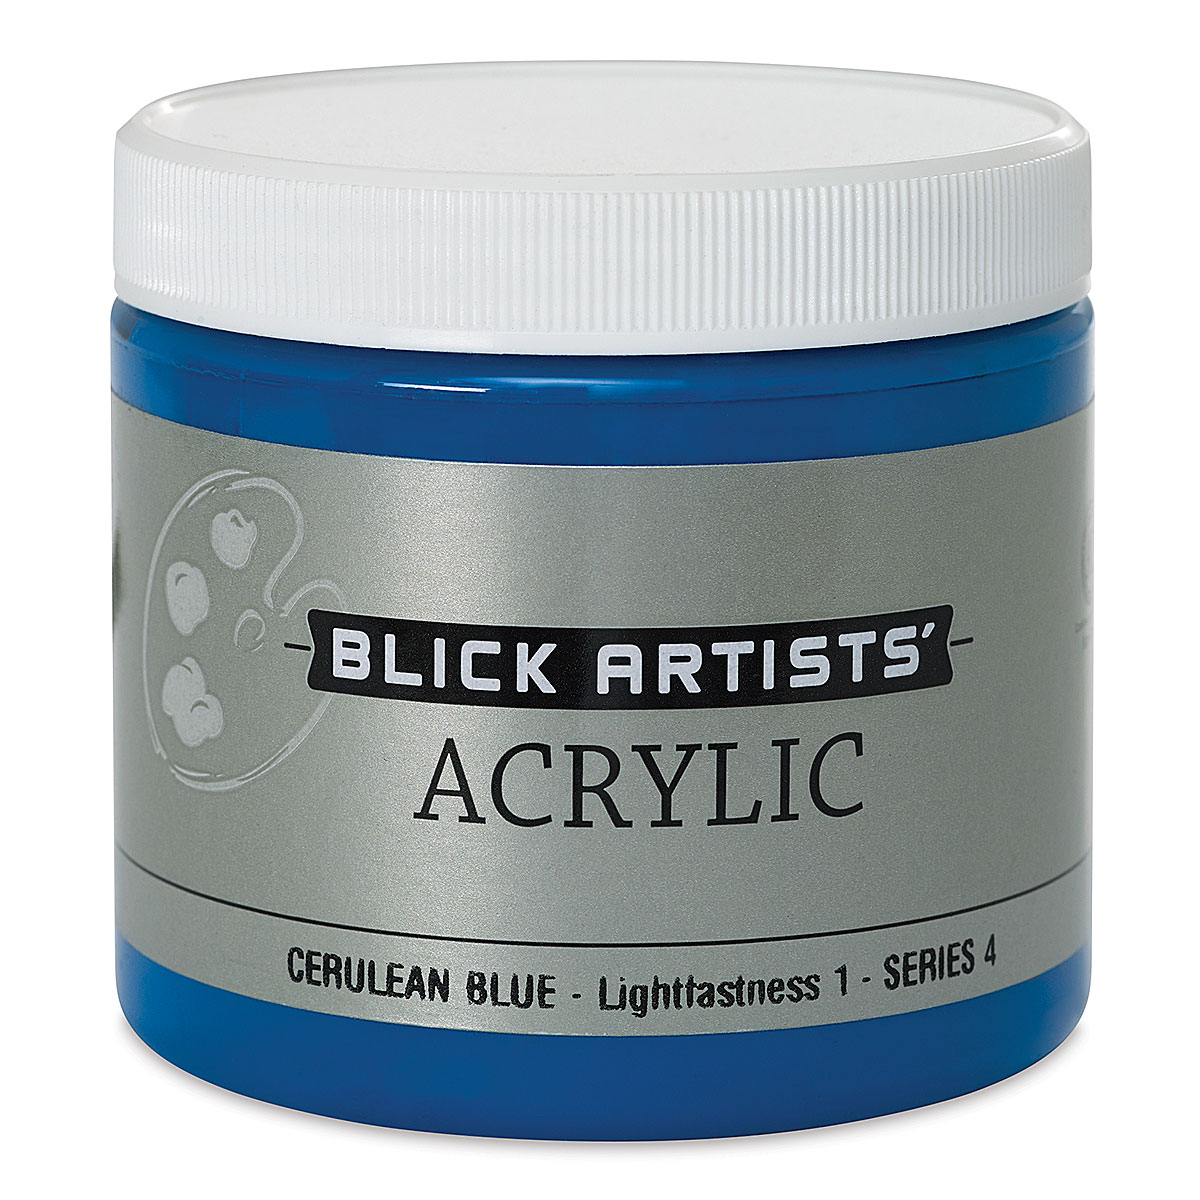 Blick Artists' Acrylic - Cerulean Blue, 16 oz jar